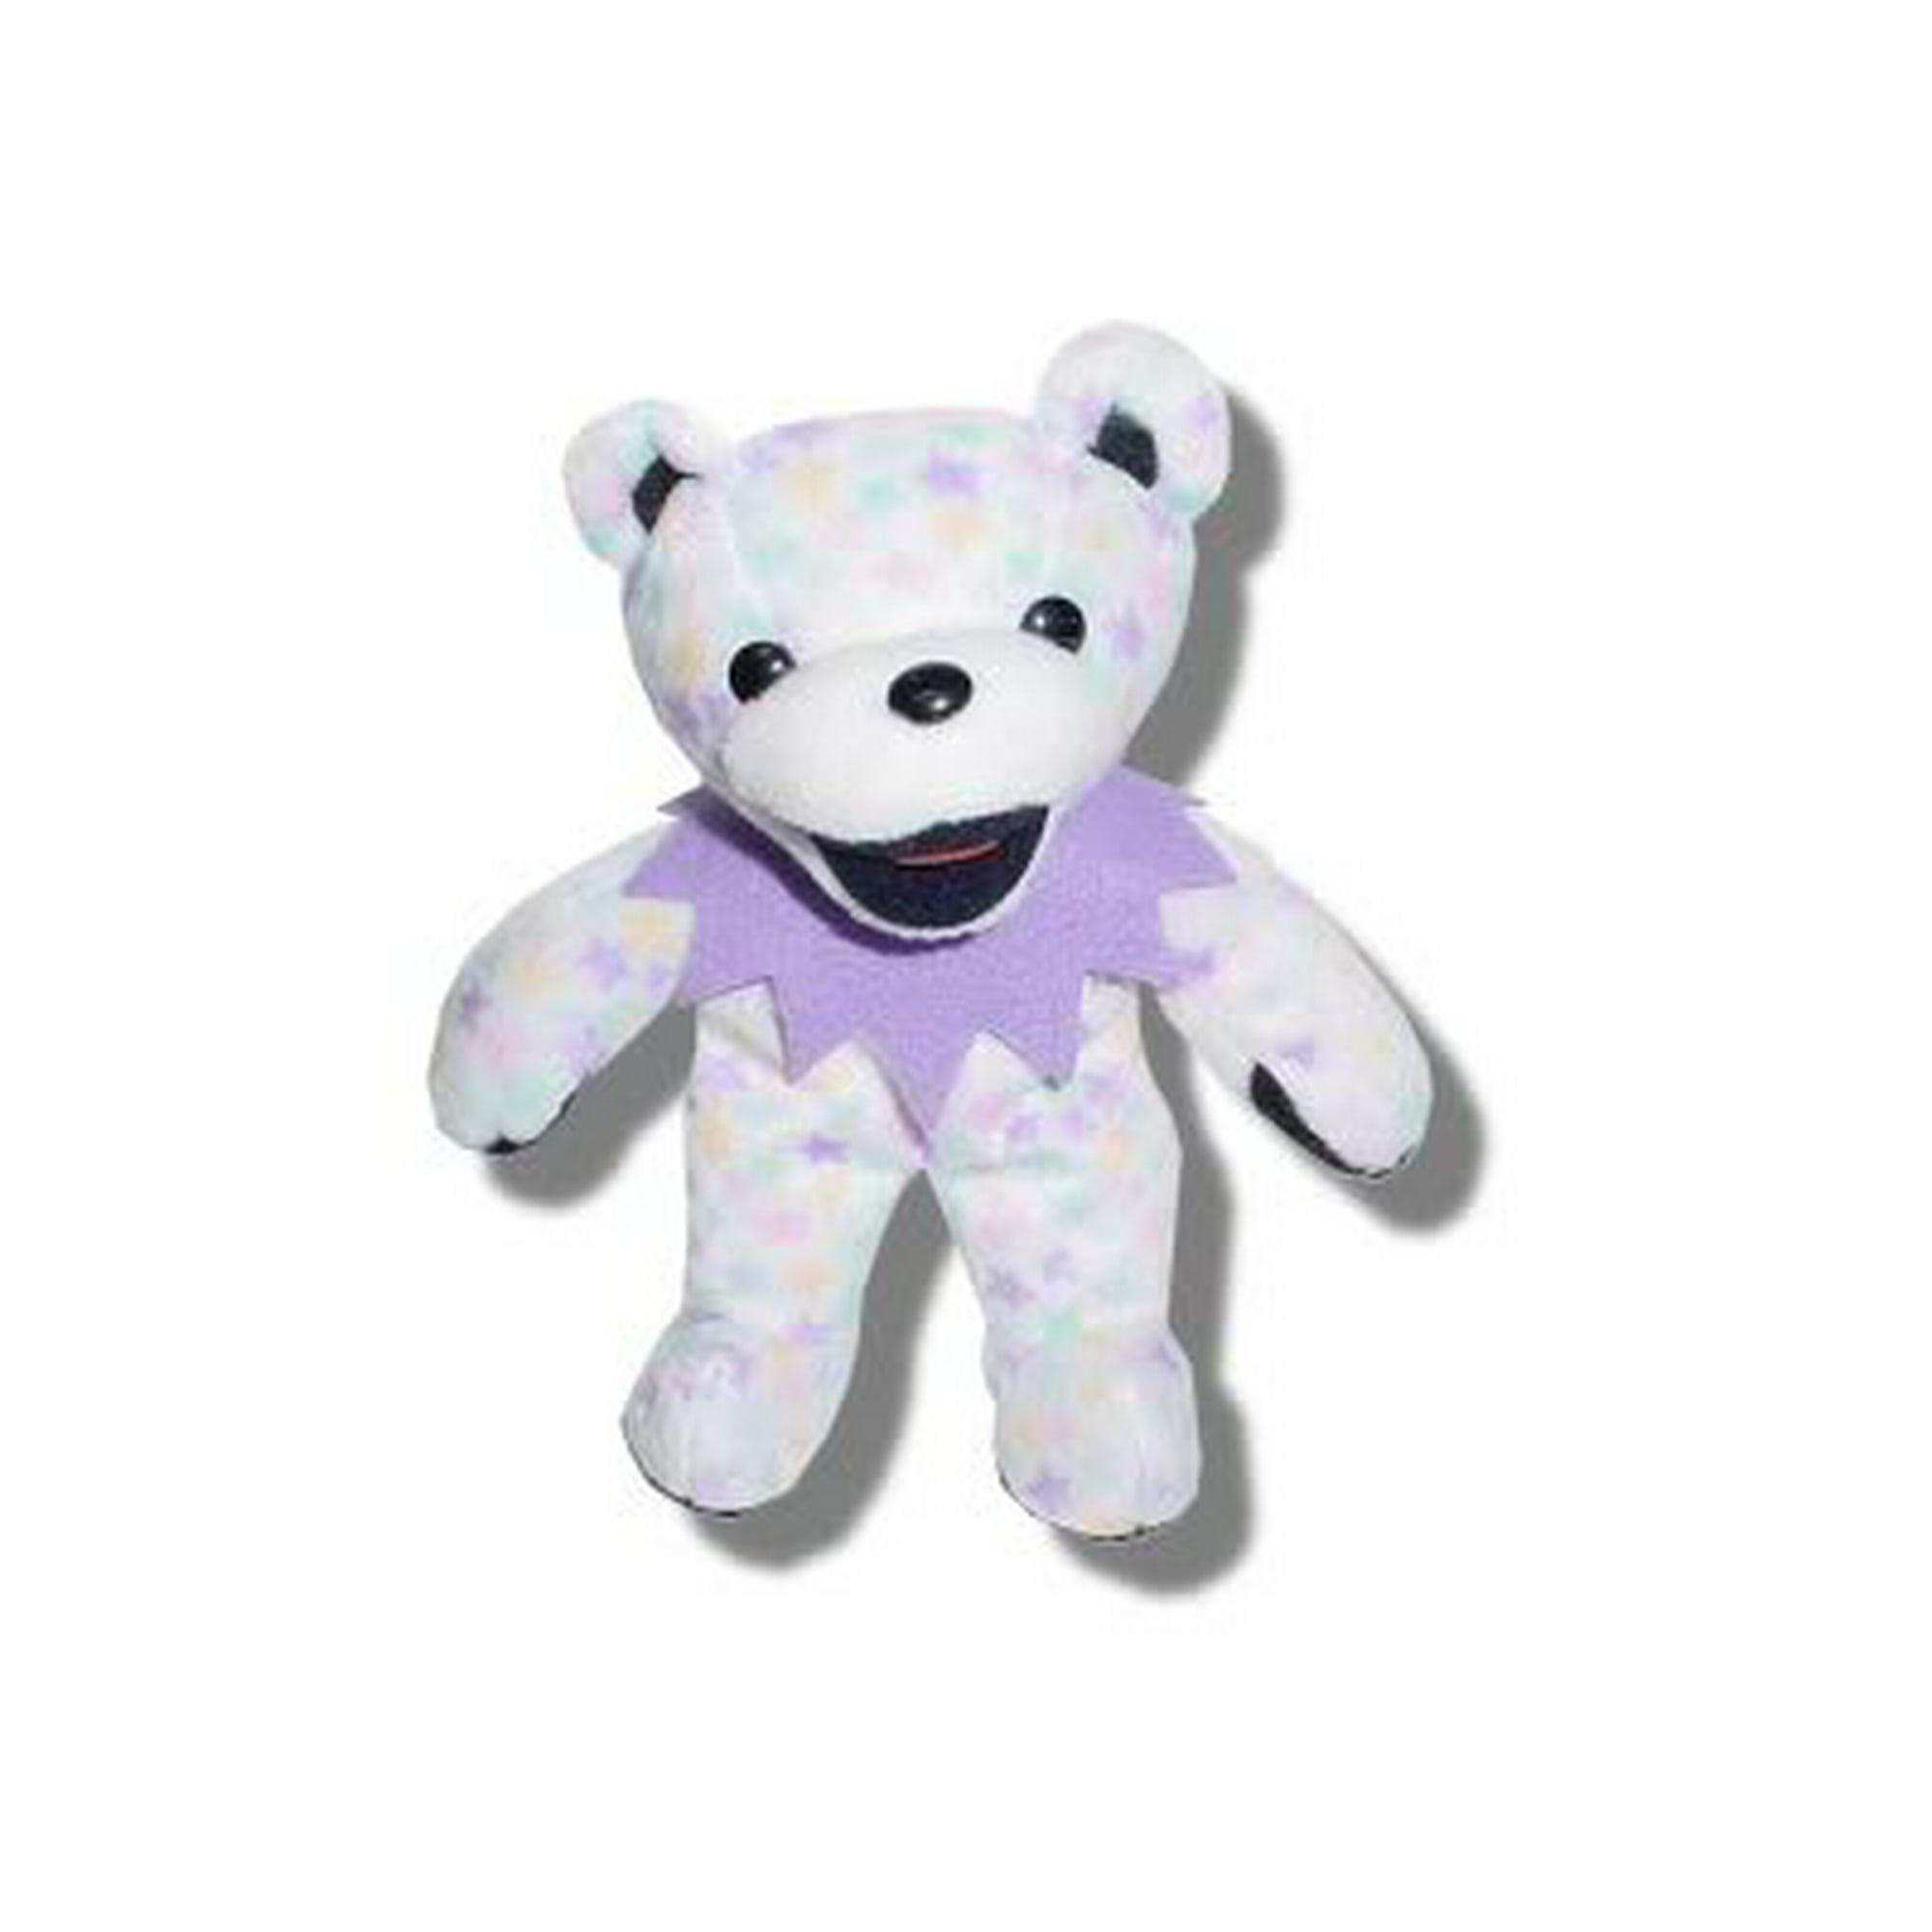 Grateful Dead Bean Bear Spinner Teddy Bear | Walmart Canada